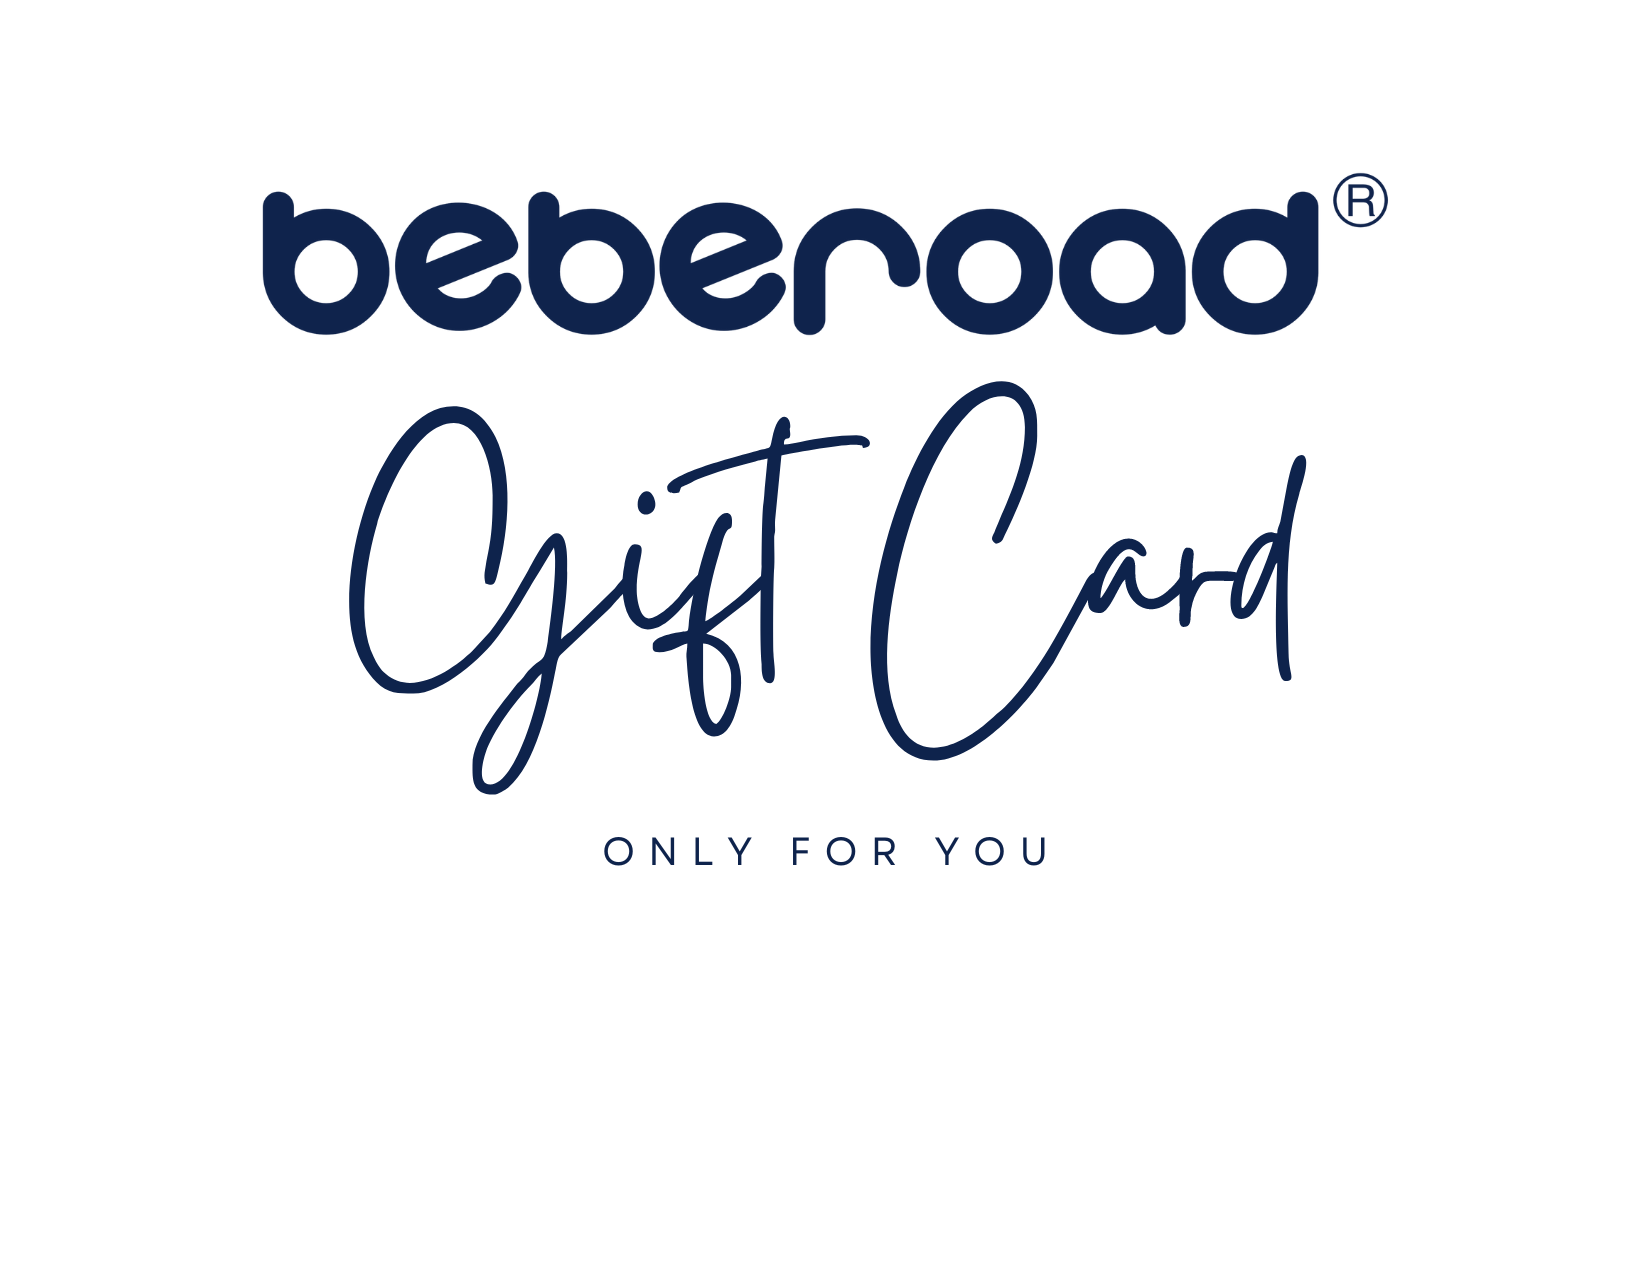 Beberoad Gift Card